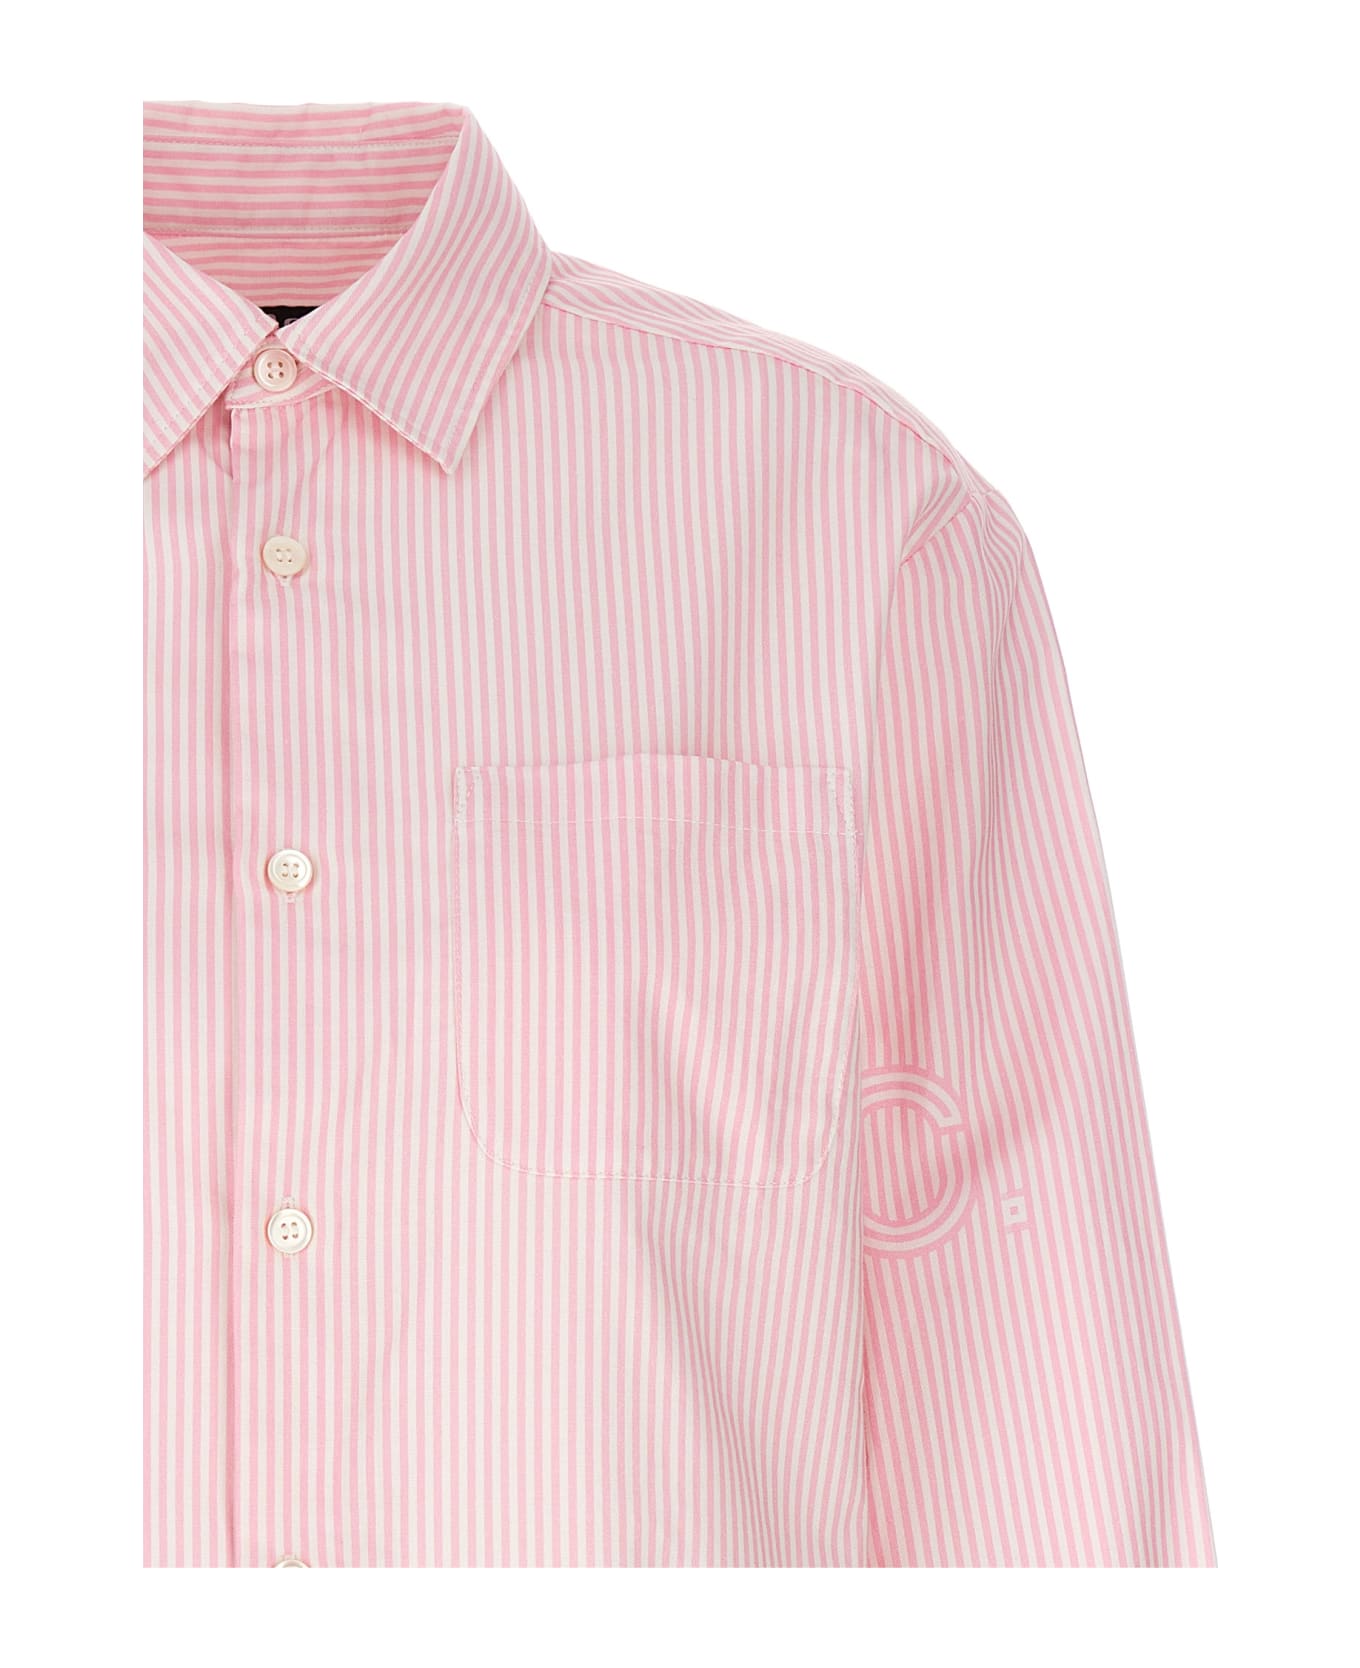 A.P.C. Sela Shirt - Faa Pink